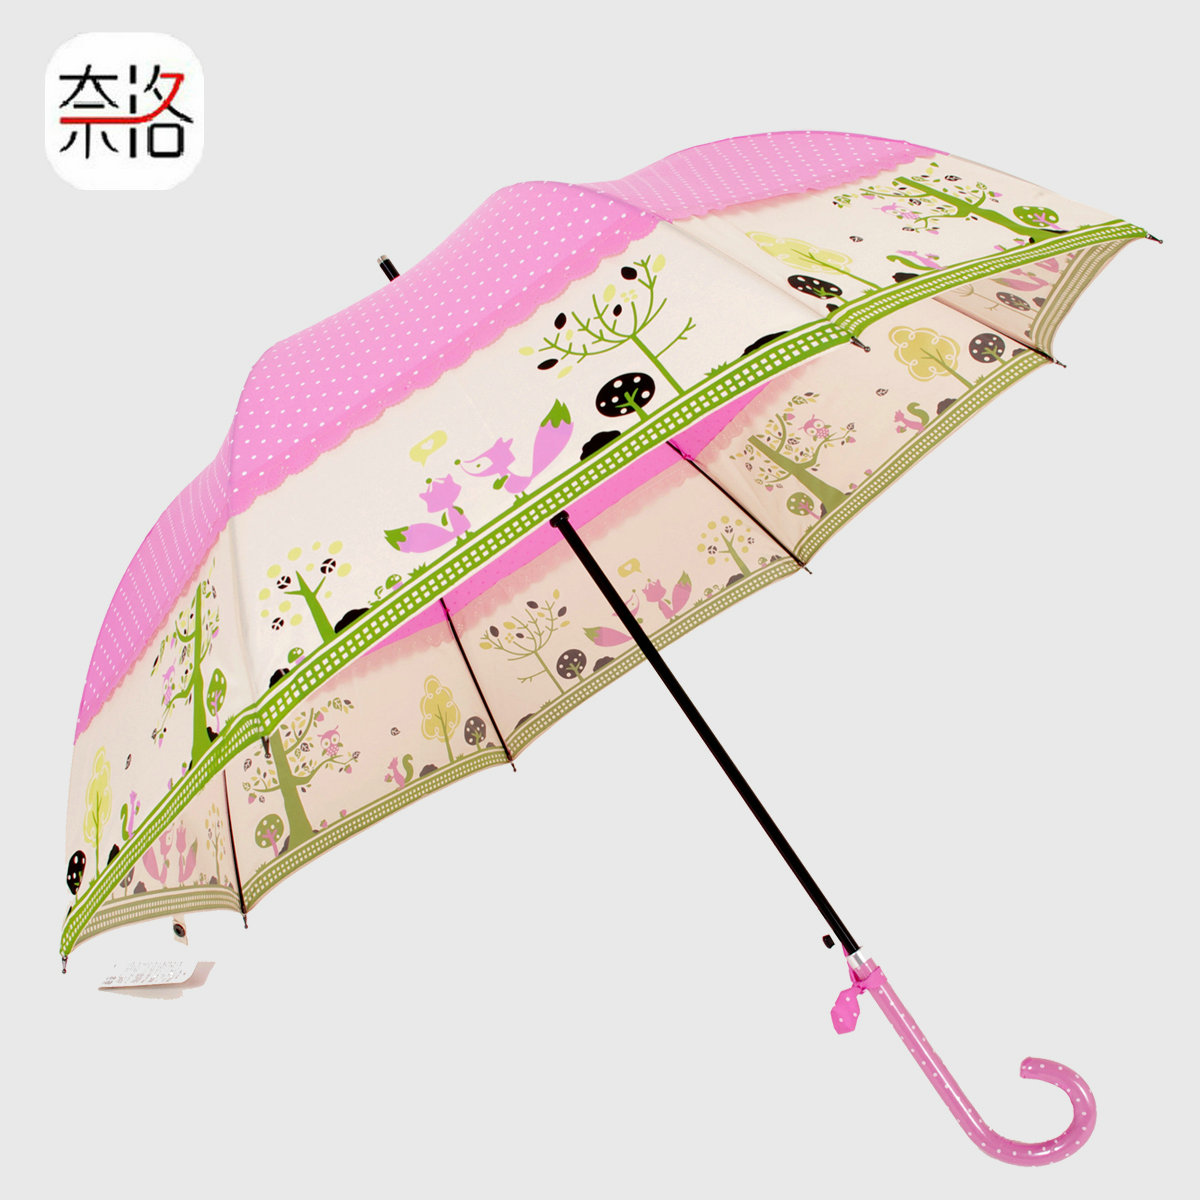 niello新款可爱小松鼠点点韩国清新花边长柄伞公主伞拱形伞晴雨伞